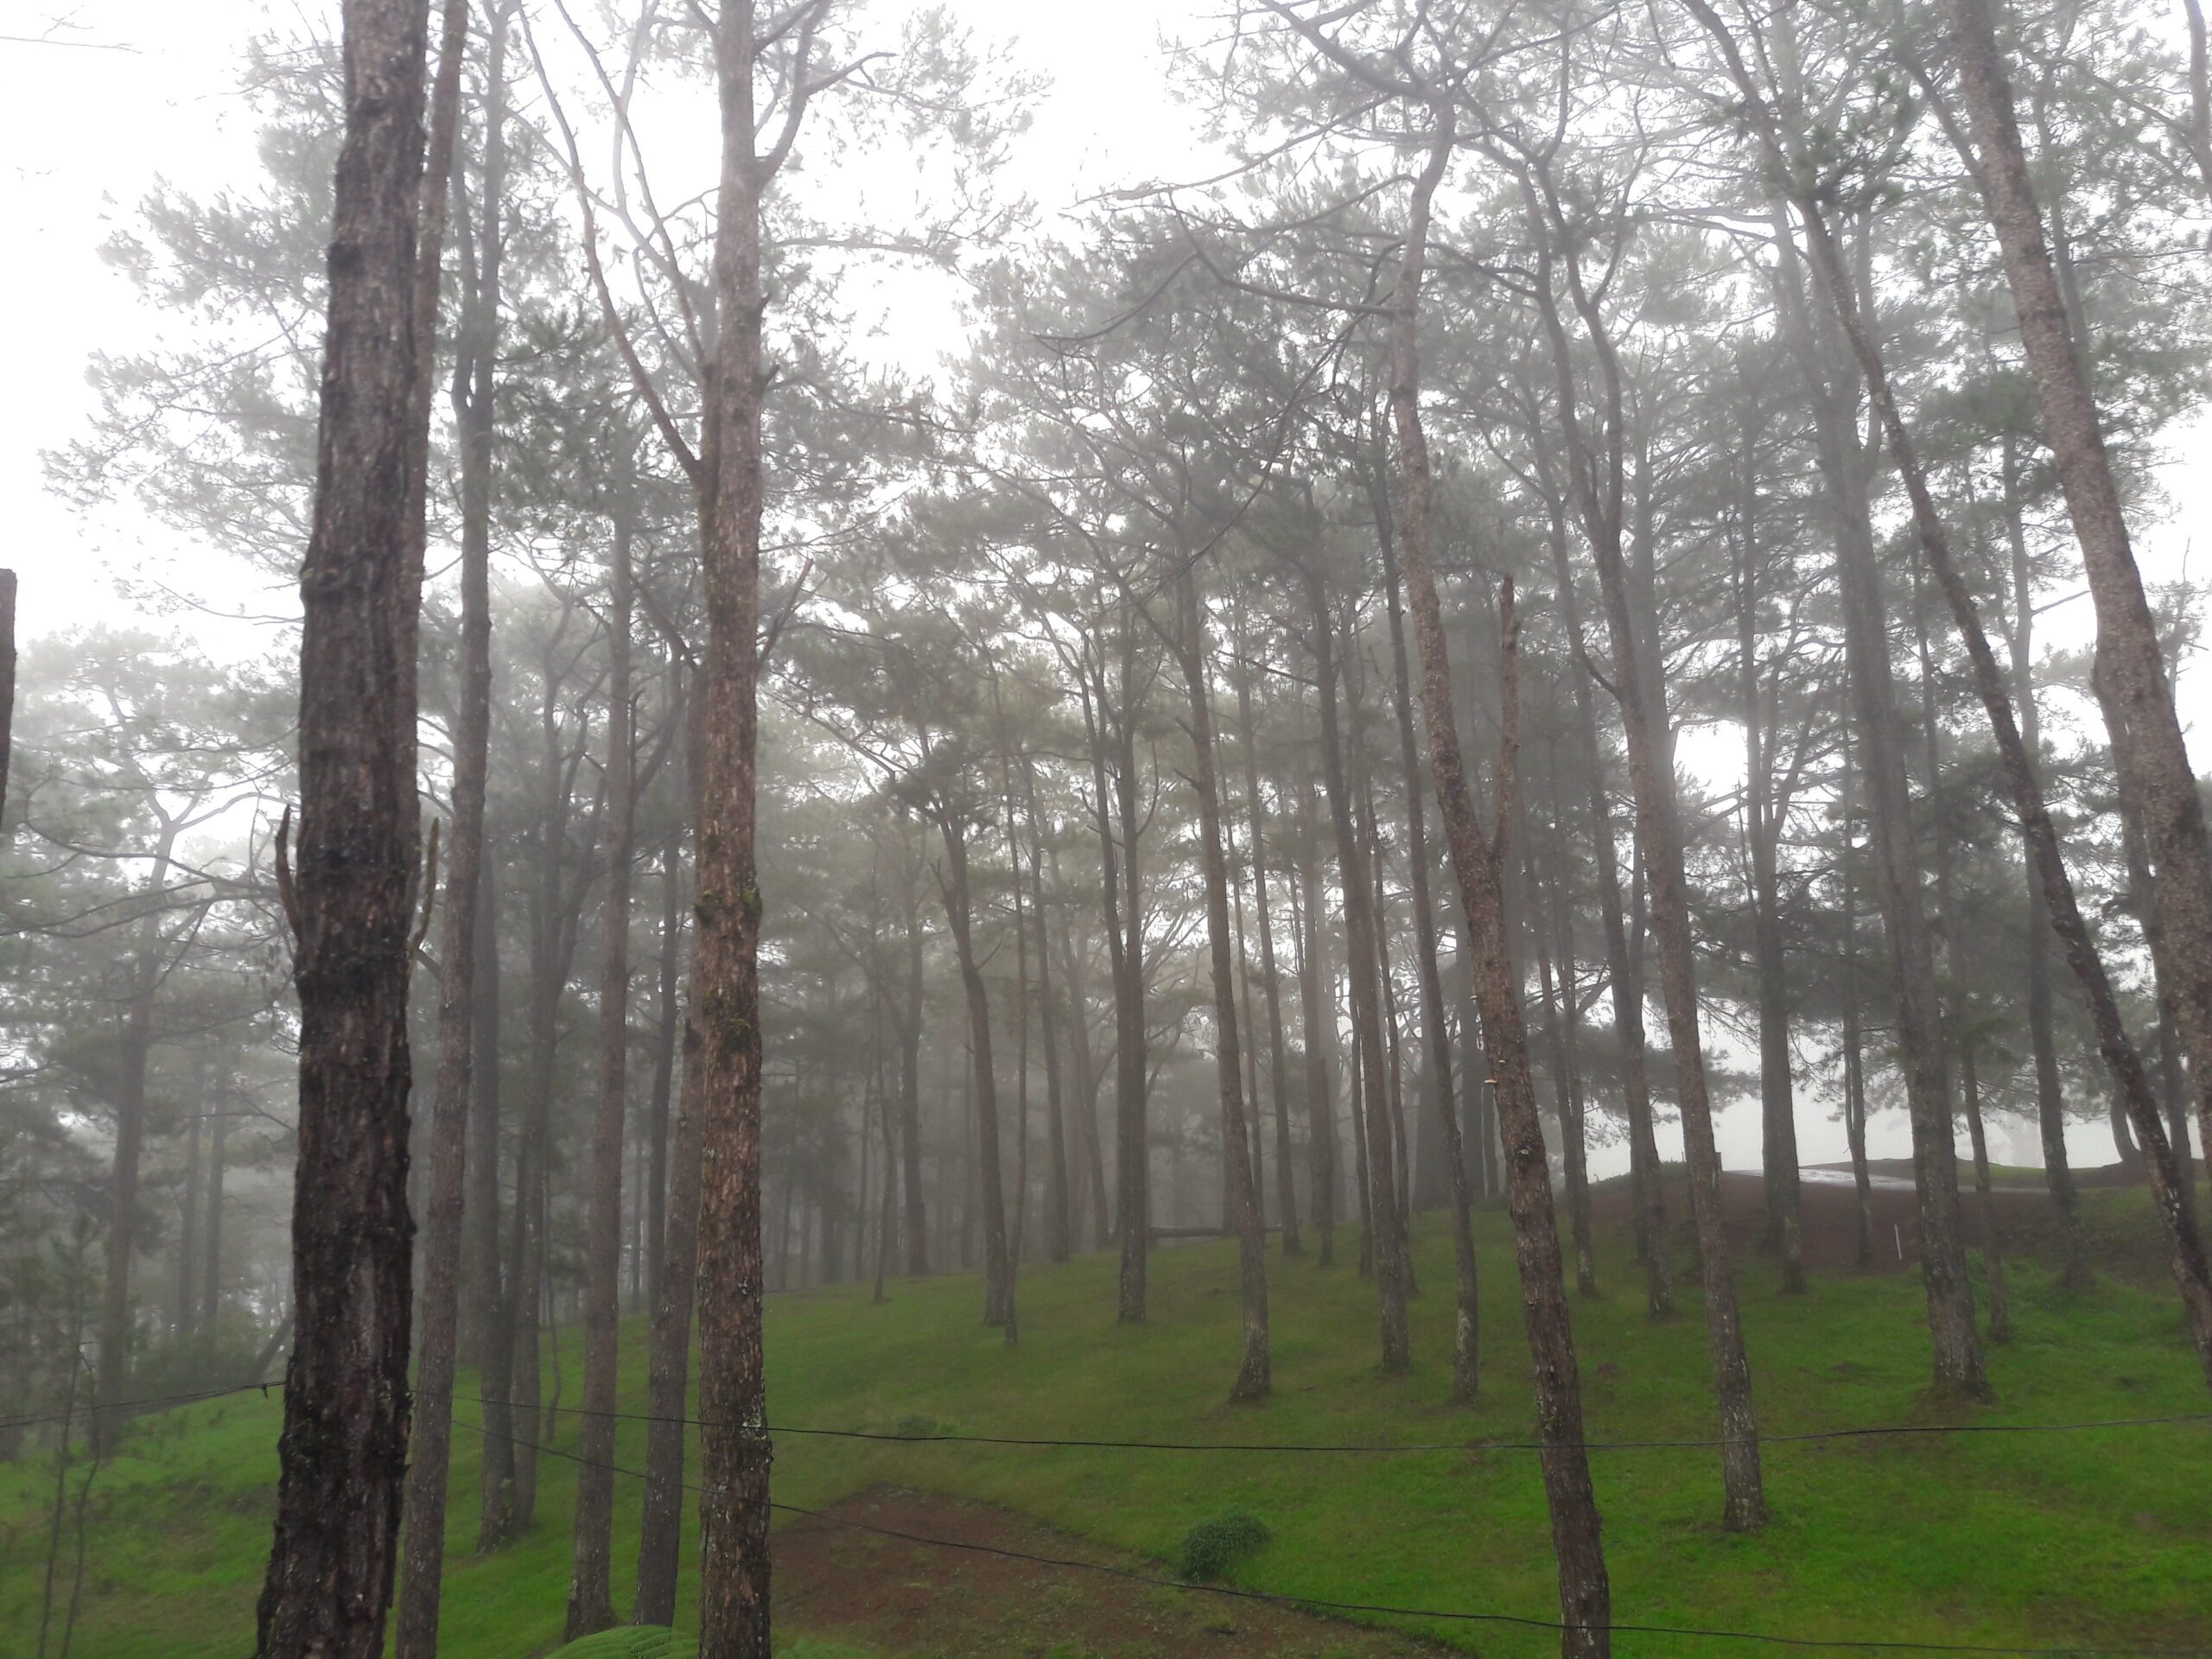 DENR chief Cimatu fears Baguio ‘may lose pine trees’